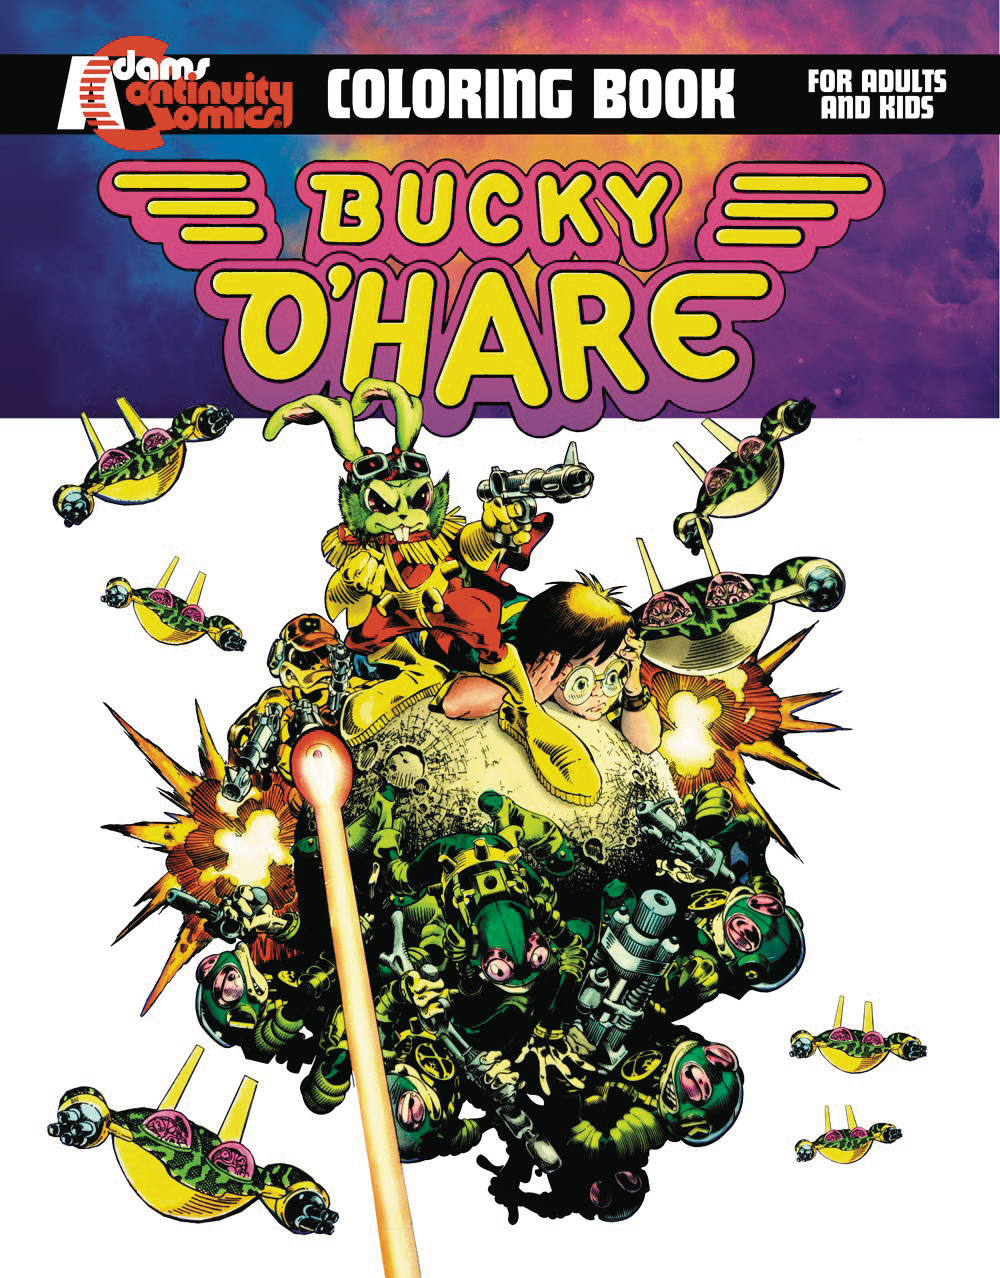 Bucky ohare comics